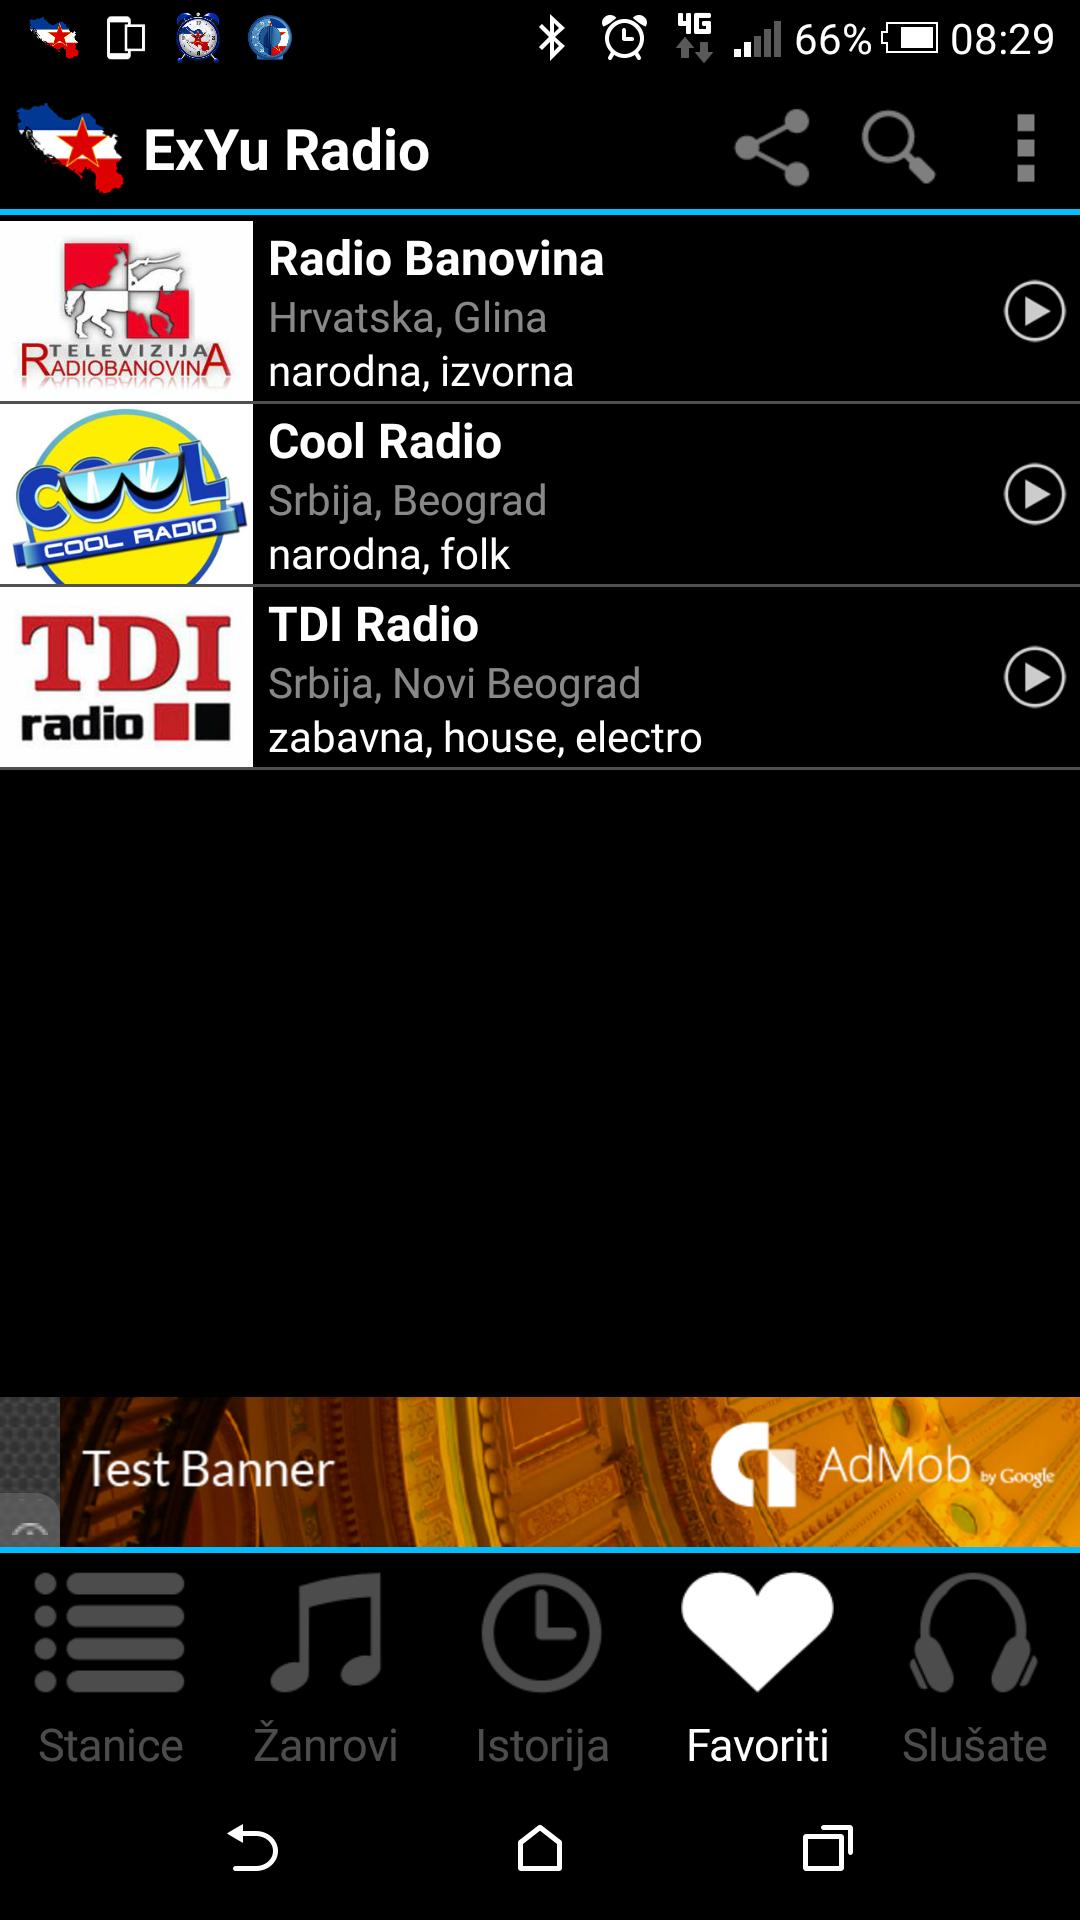 Exyu Radio For Android Apk Download - coolest kid on roblox policijasrbija123 roblox